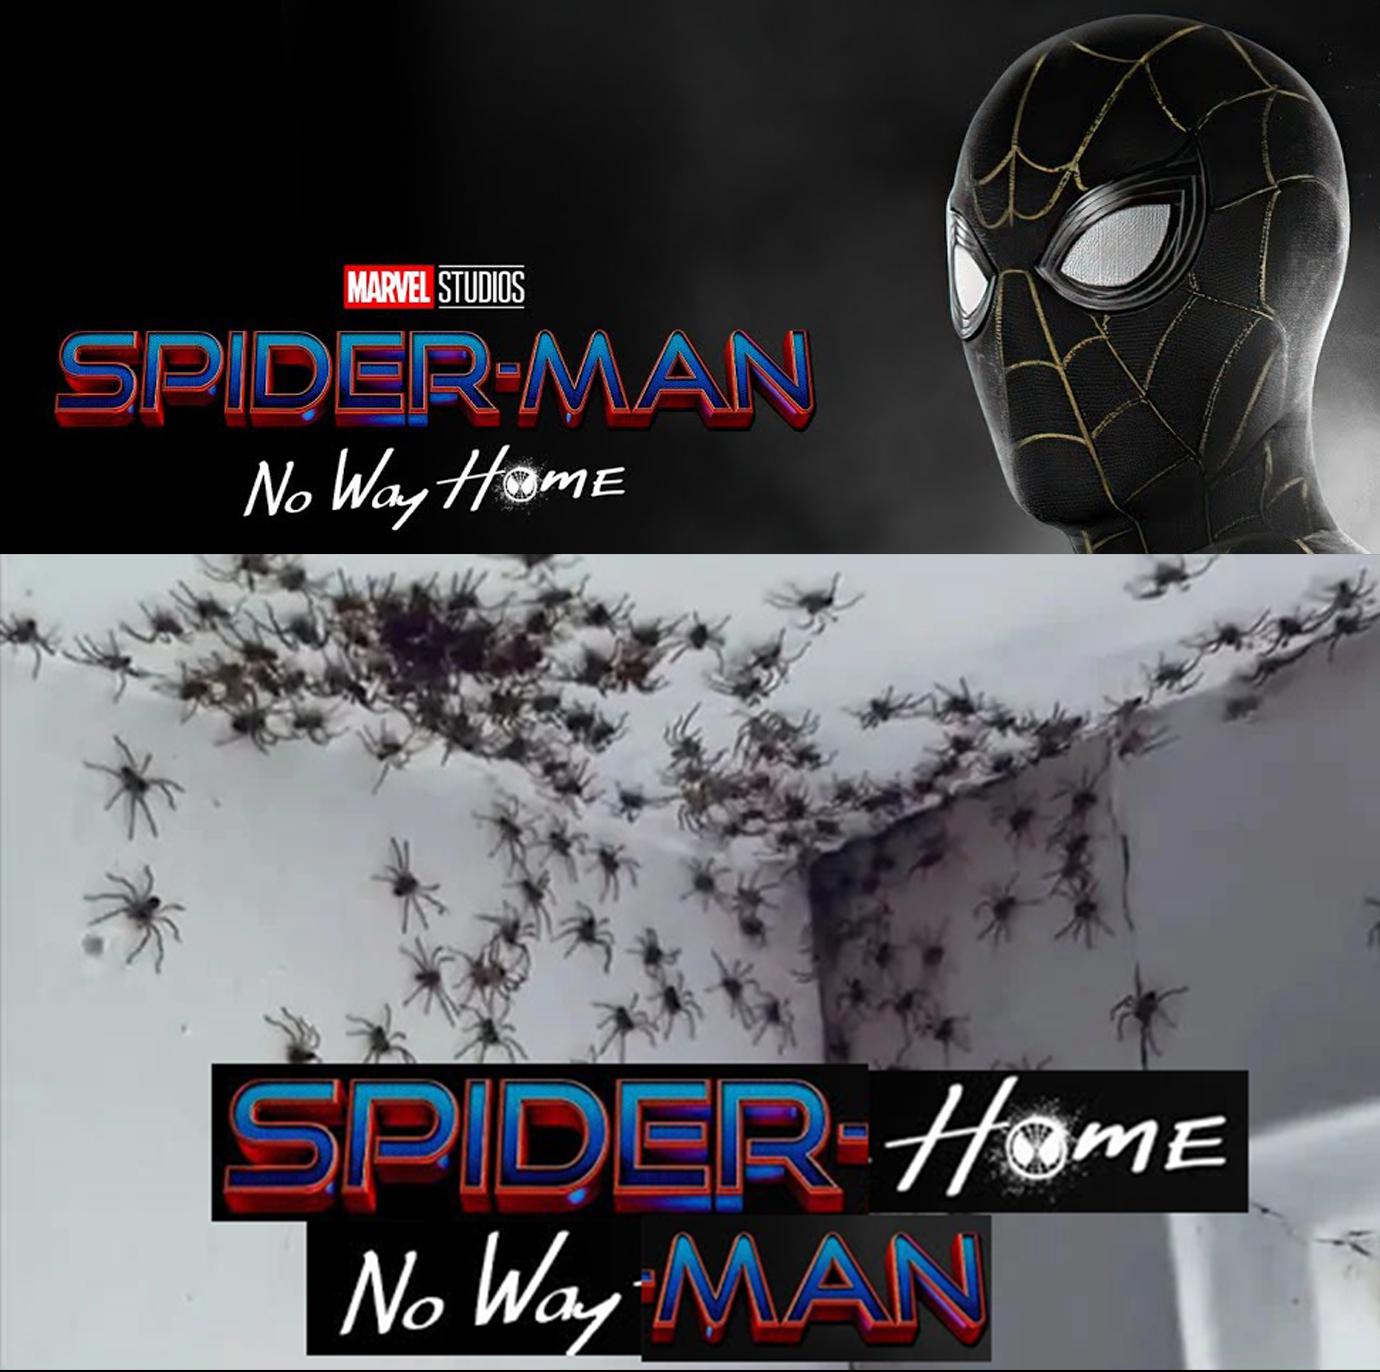 huntsman spider infestation - Marvel Studios SpiderMan No Way Home Spider Home No Way Man